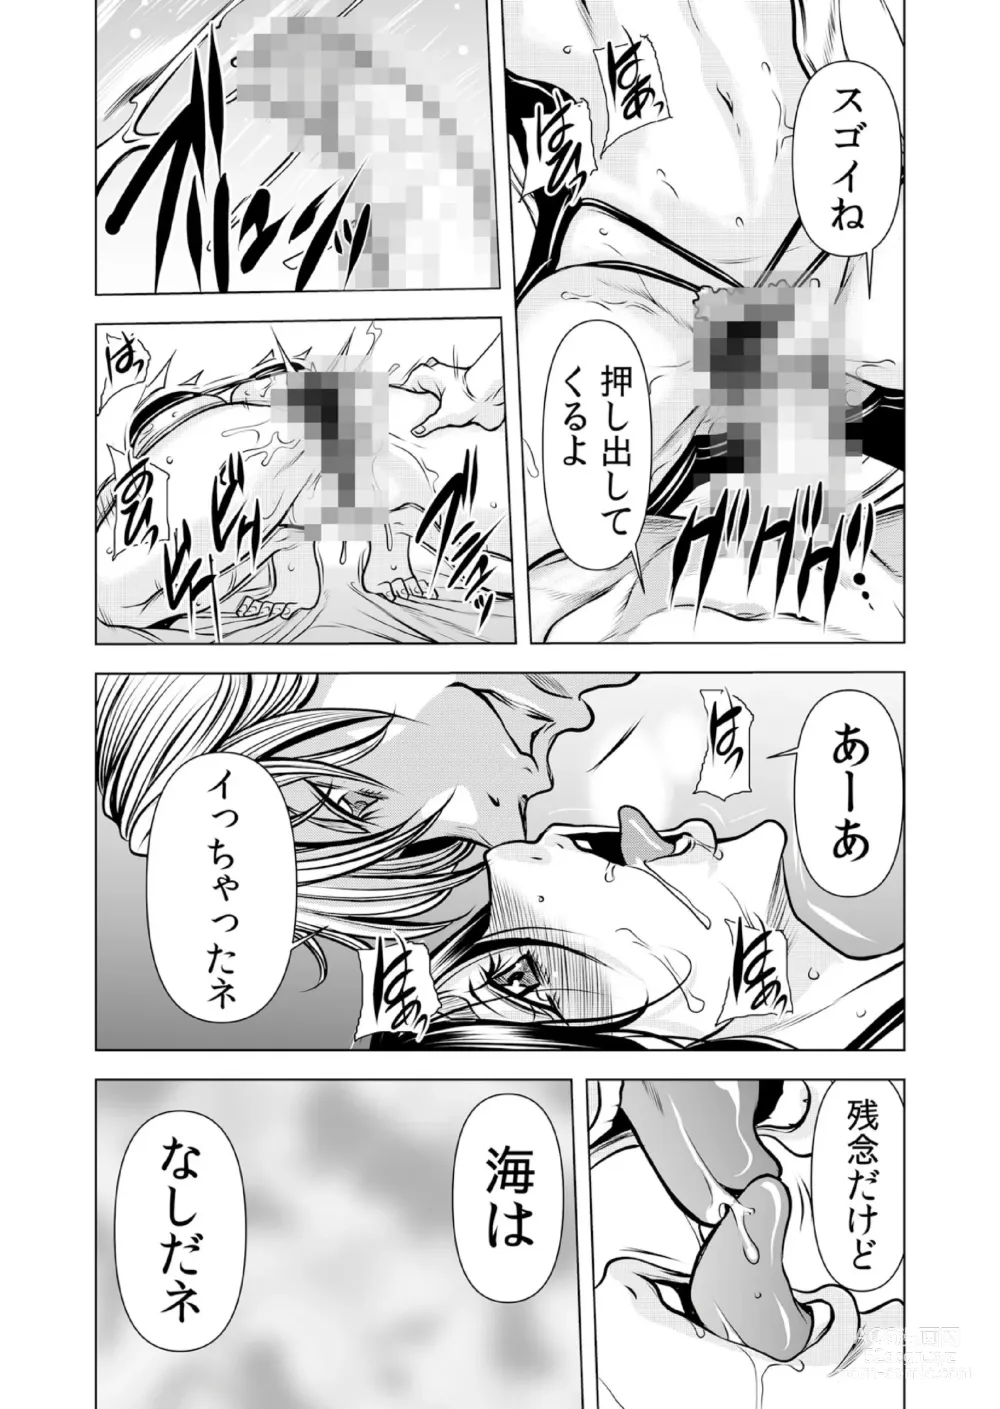 Page 17 of manga Mamasan,yobai ha OK desuka? VOL11